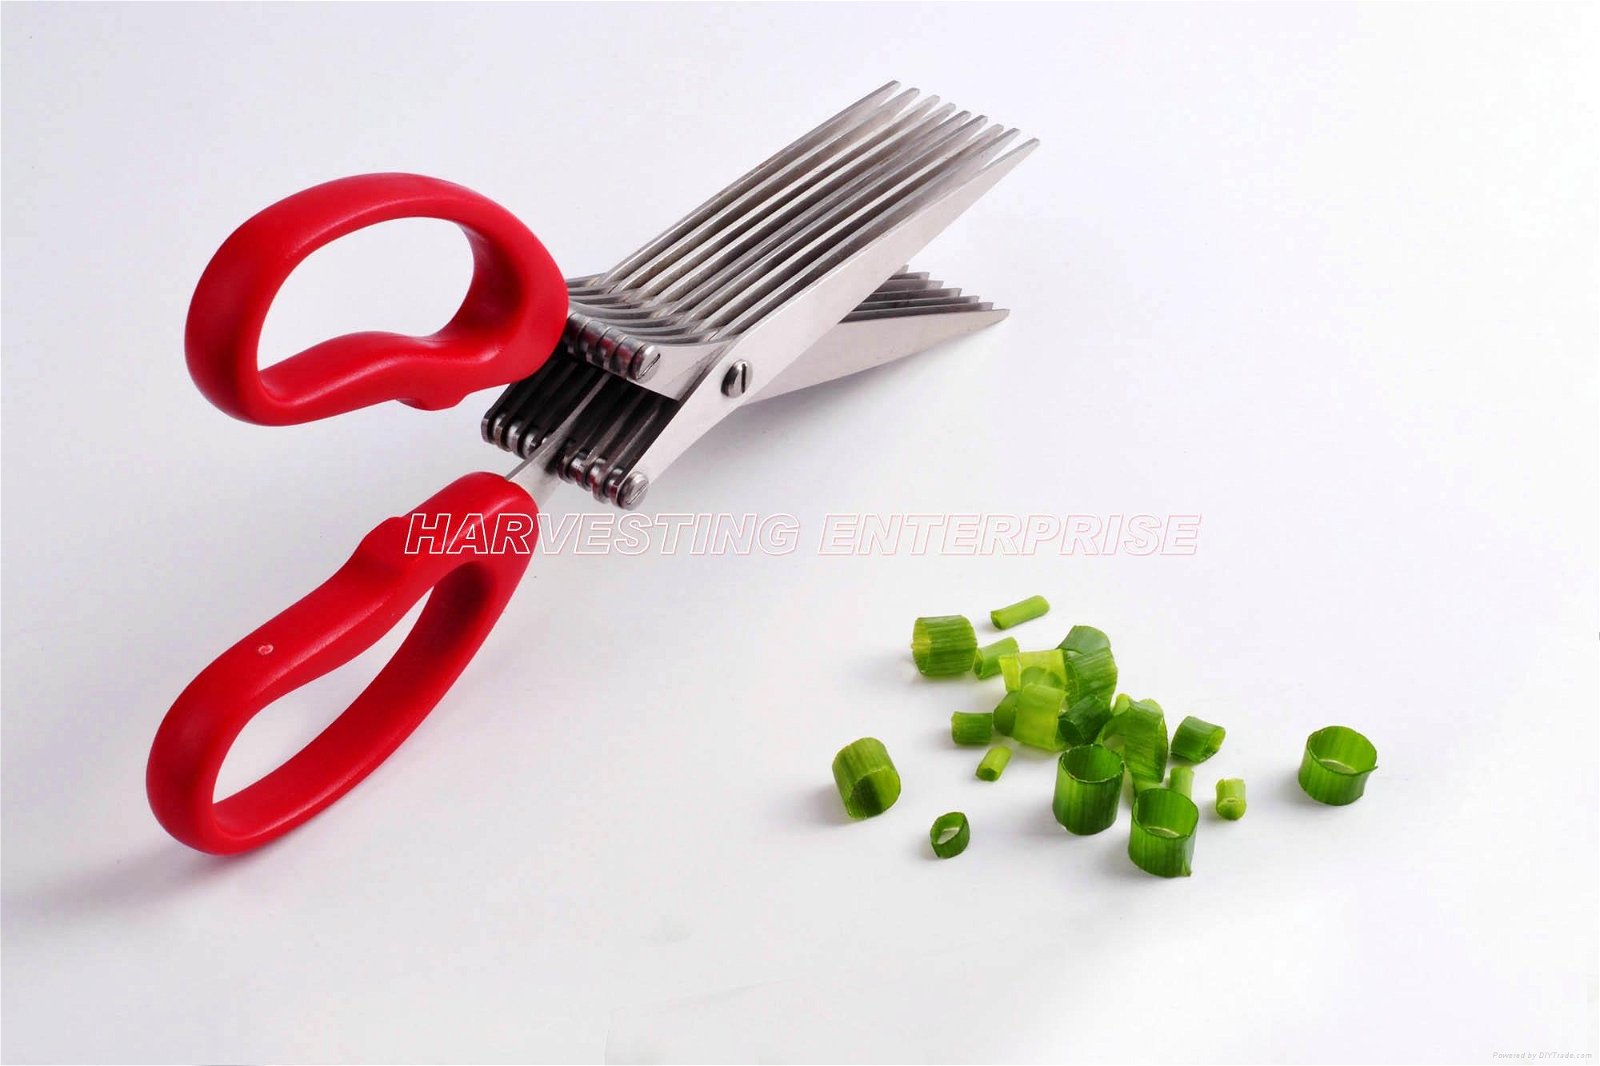 8" Herbs & Paper shredder scissors with 5 blades 